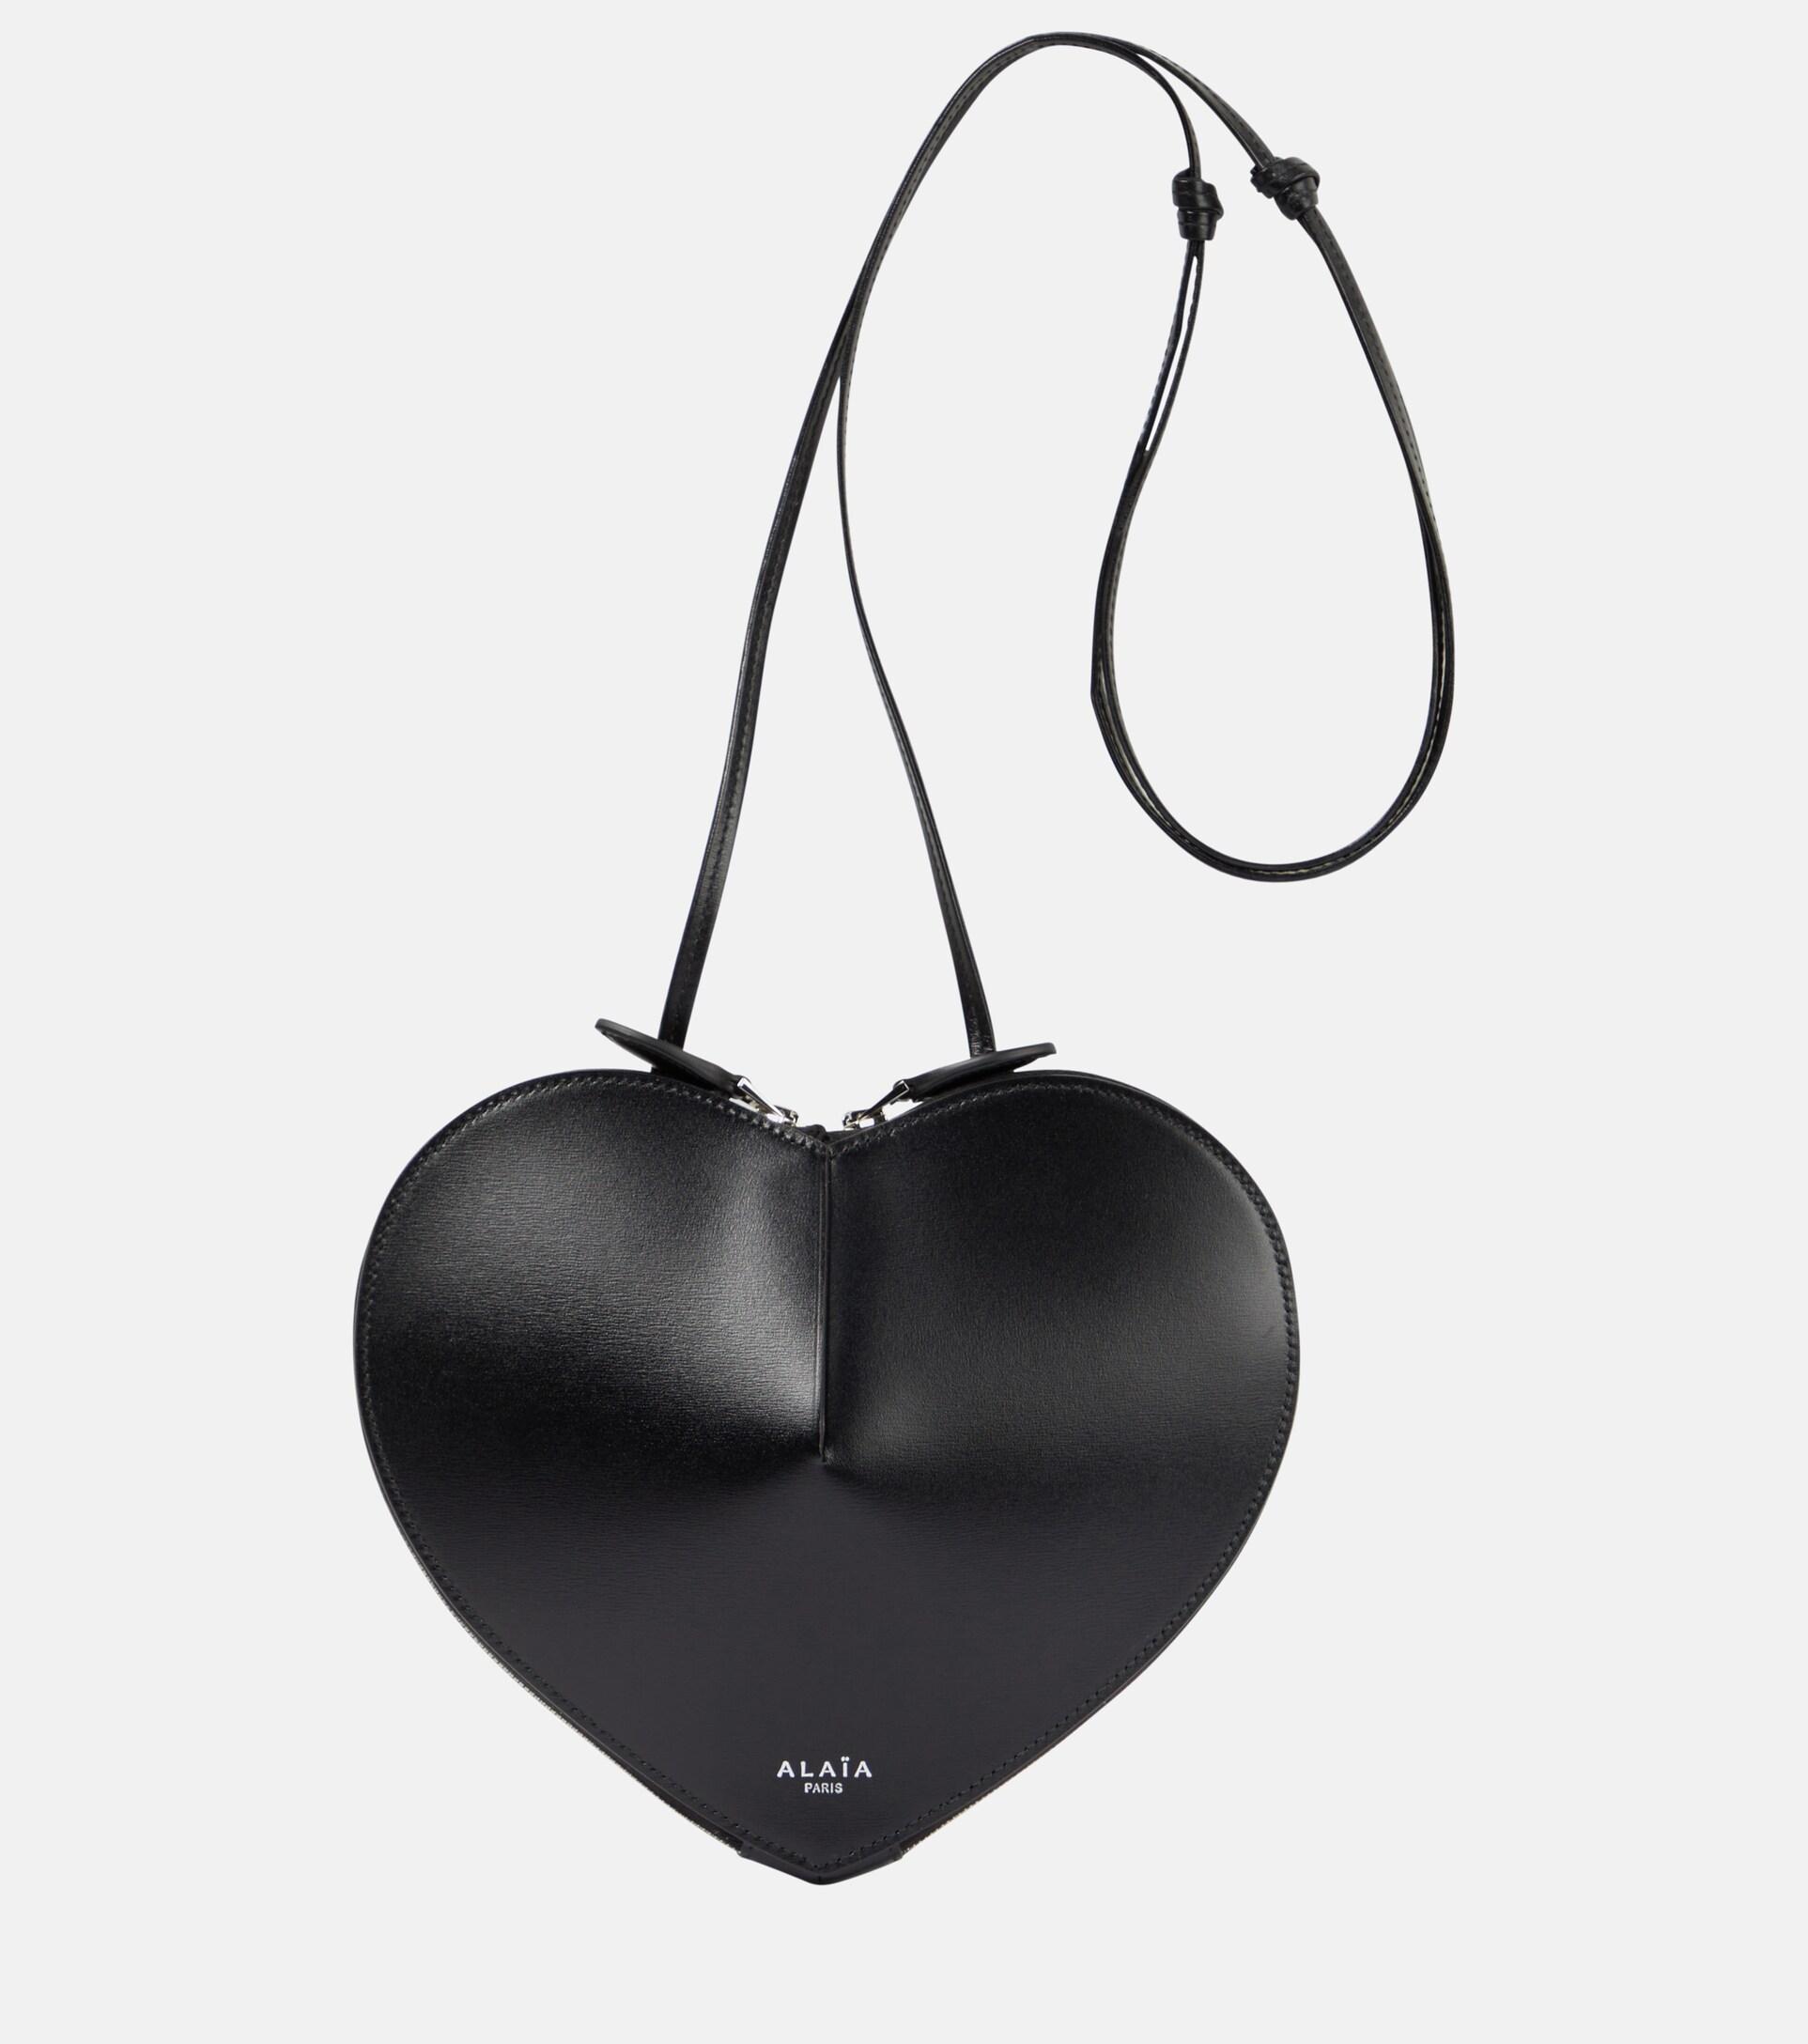 Alaïa Le Cœur Leather Shoulder Bag in Black | Lyst